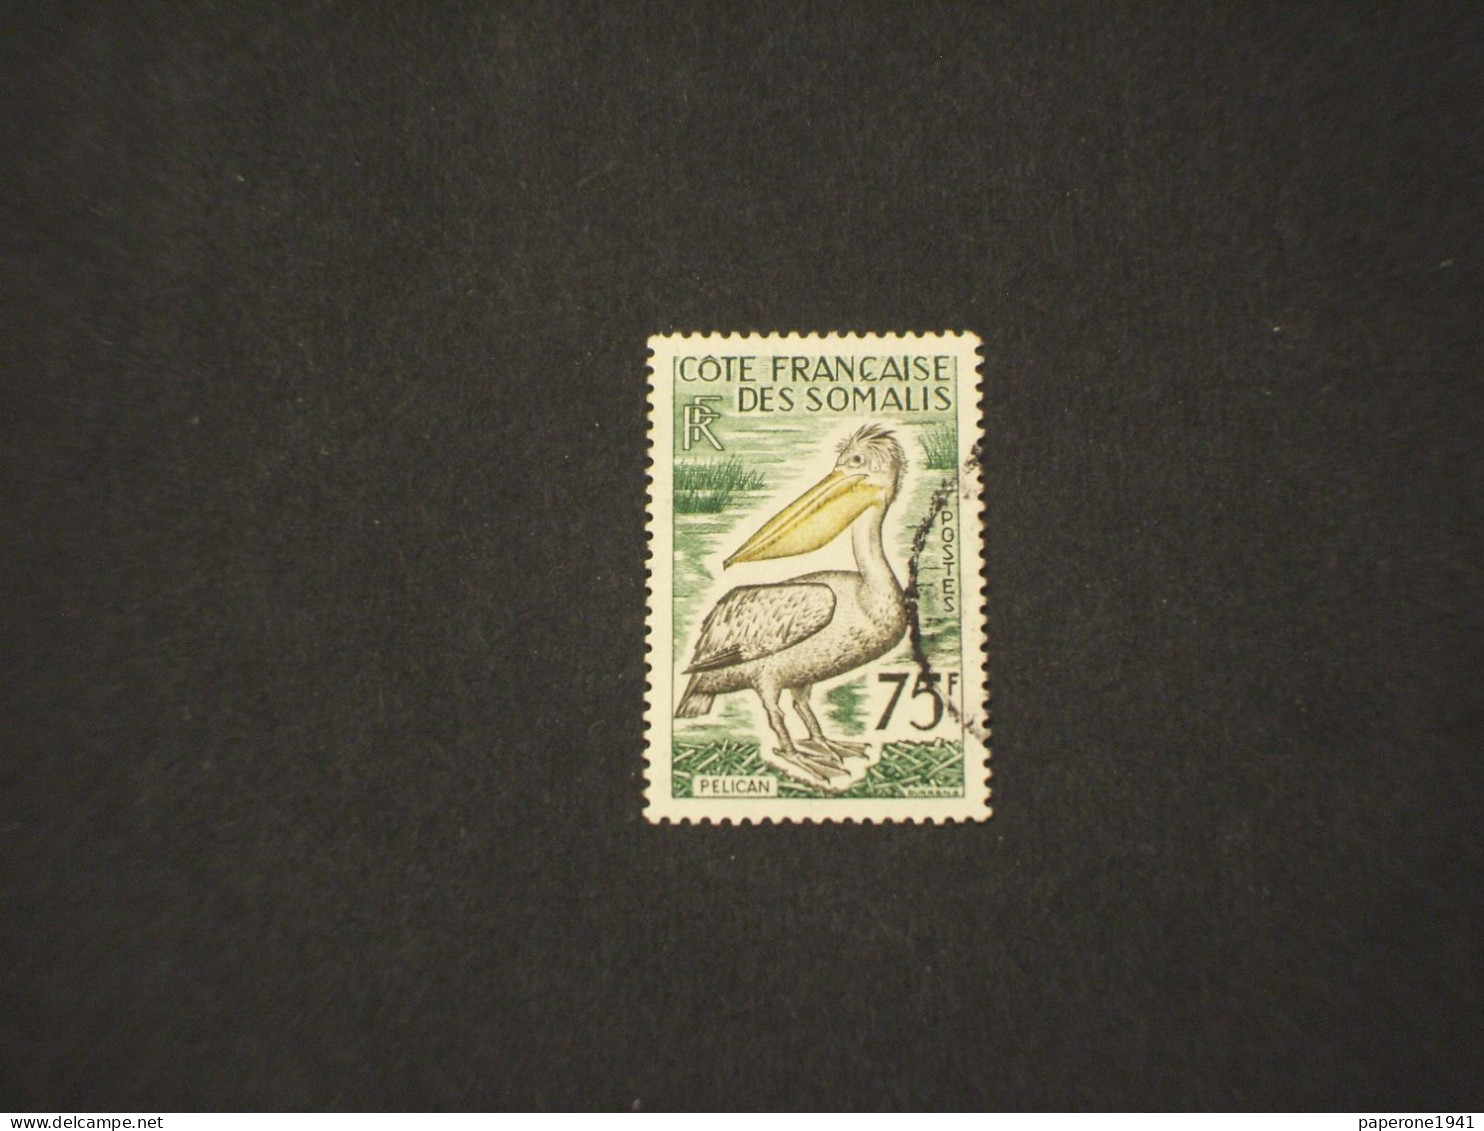 COSTA FRANCESE DEI SOMALI-COTE FRANCAISE DES SOMALIS - 1959/60 UCCELLO/PELLICANO 75 F. - TIMBRATO/USED - Used Stamps